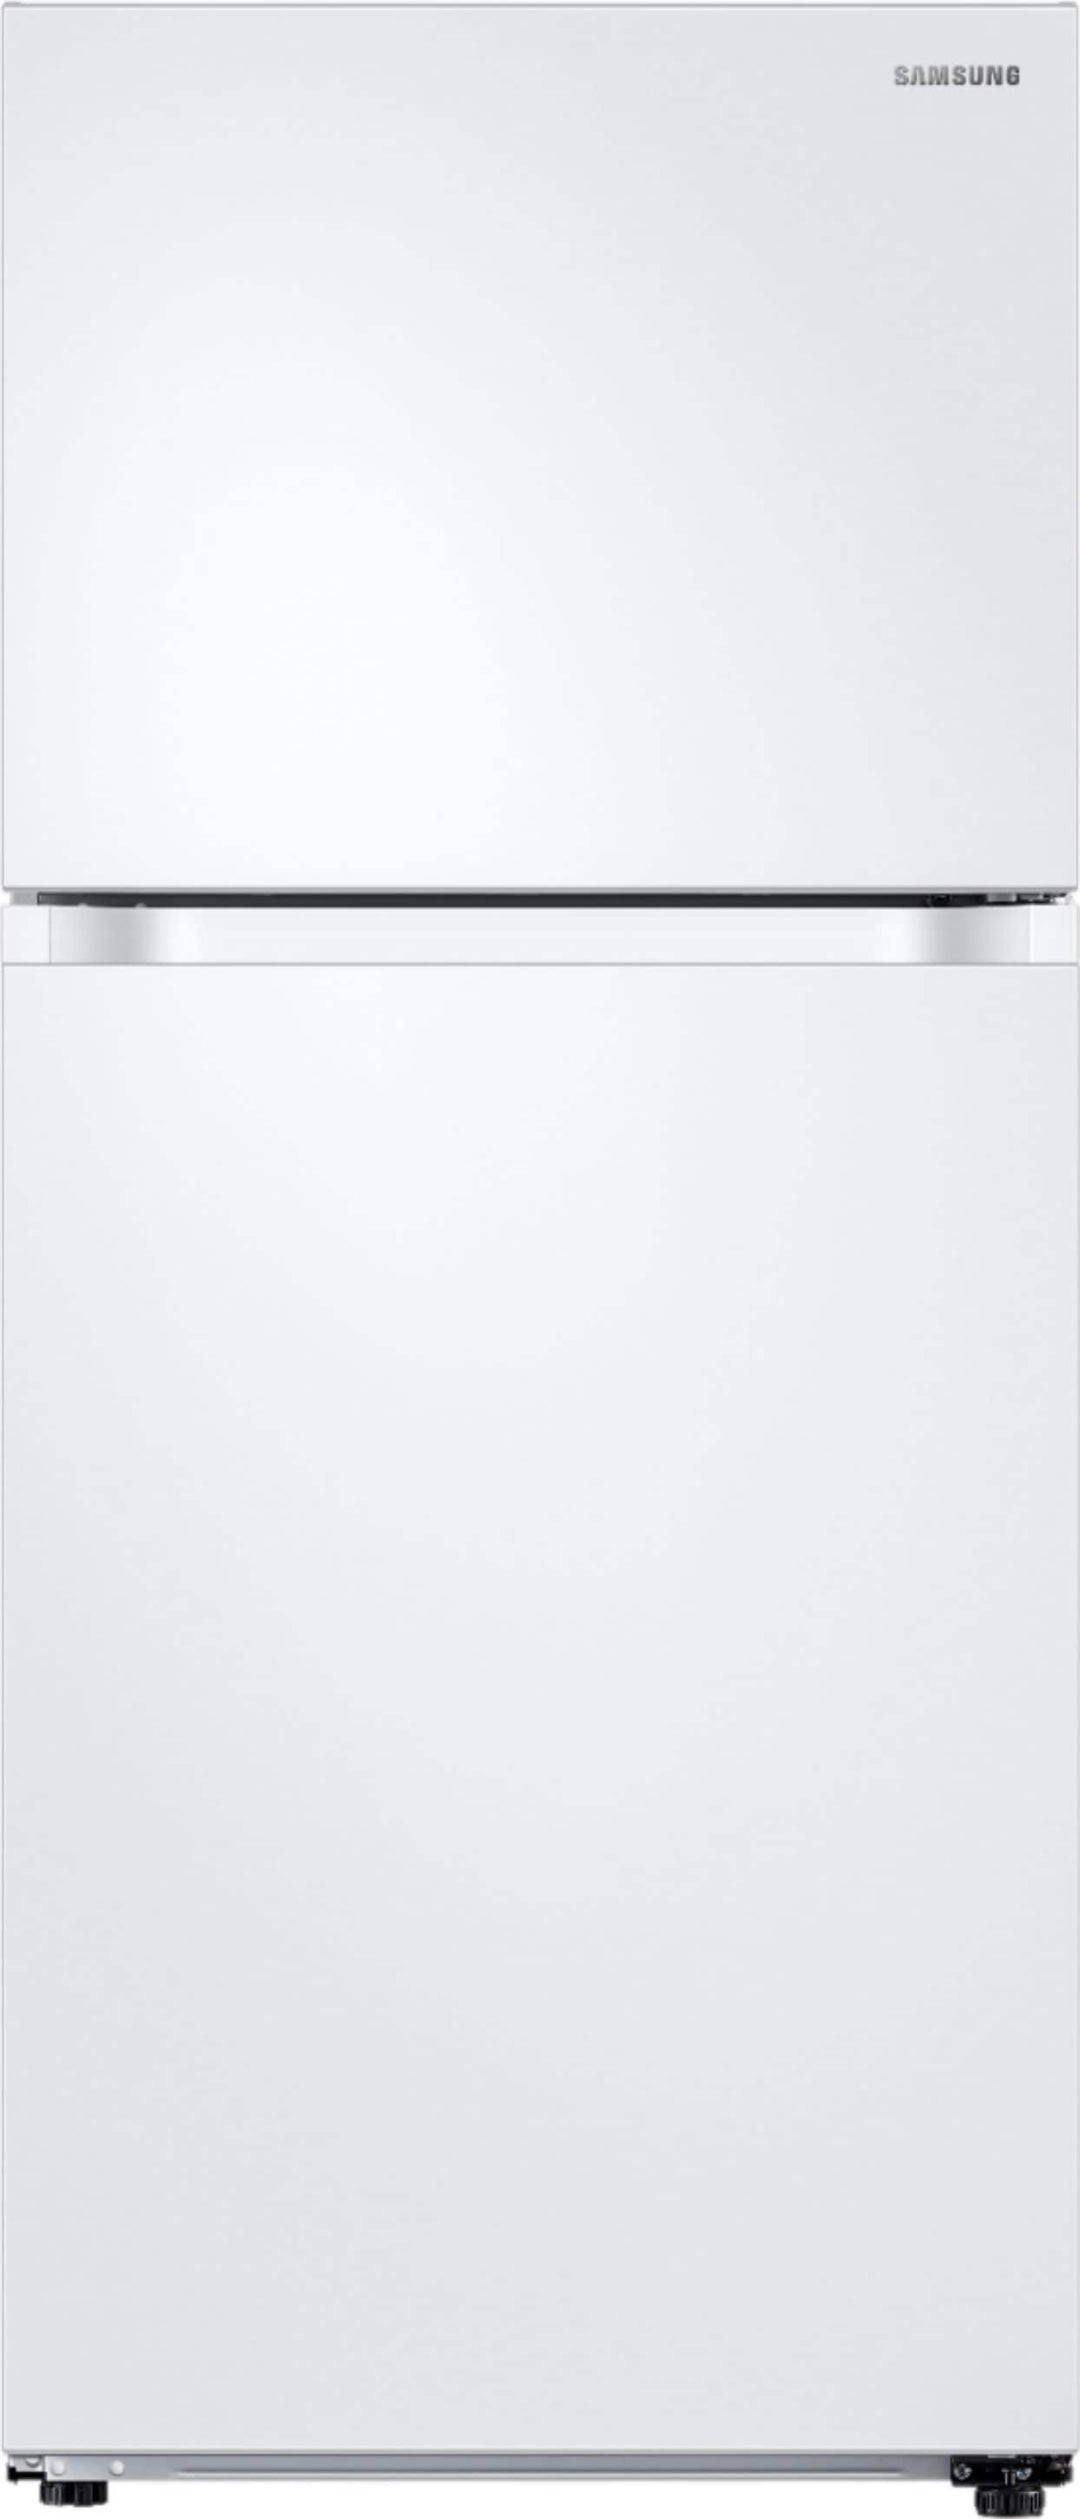 Samsung - 17.6 Cu. Ft. Top-Freezer Refrigerator - White_0